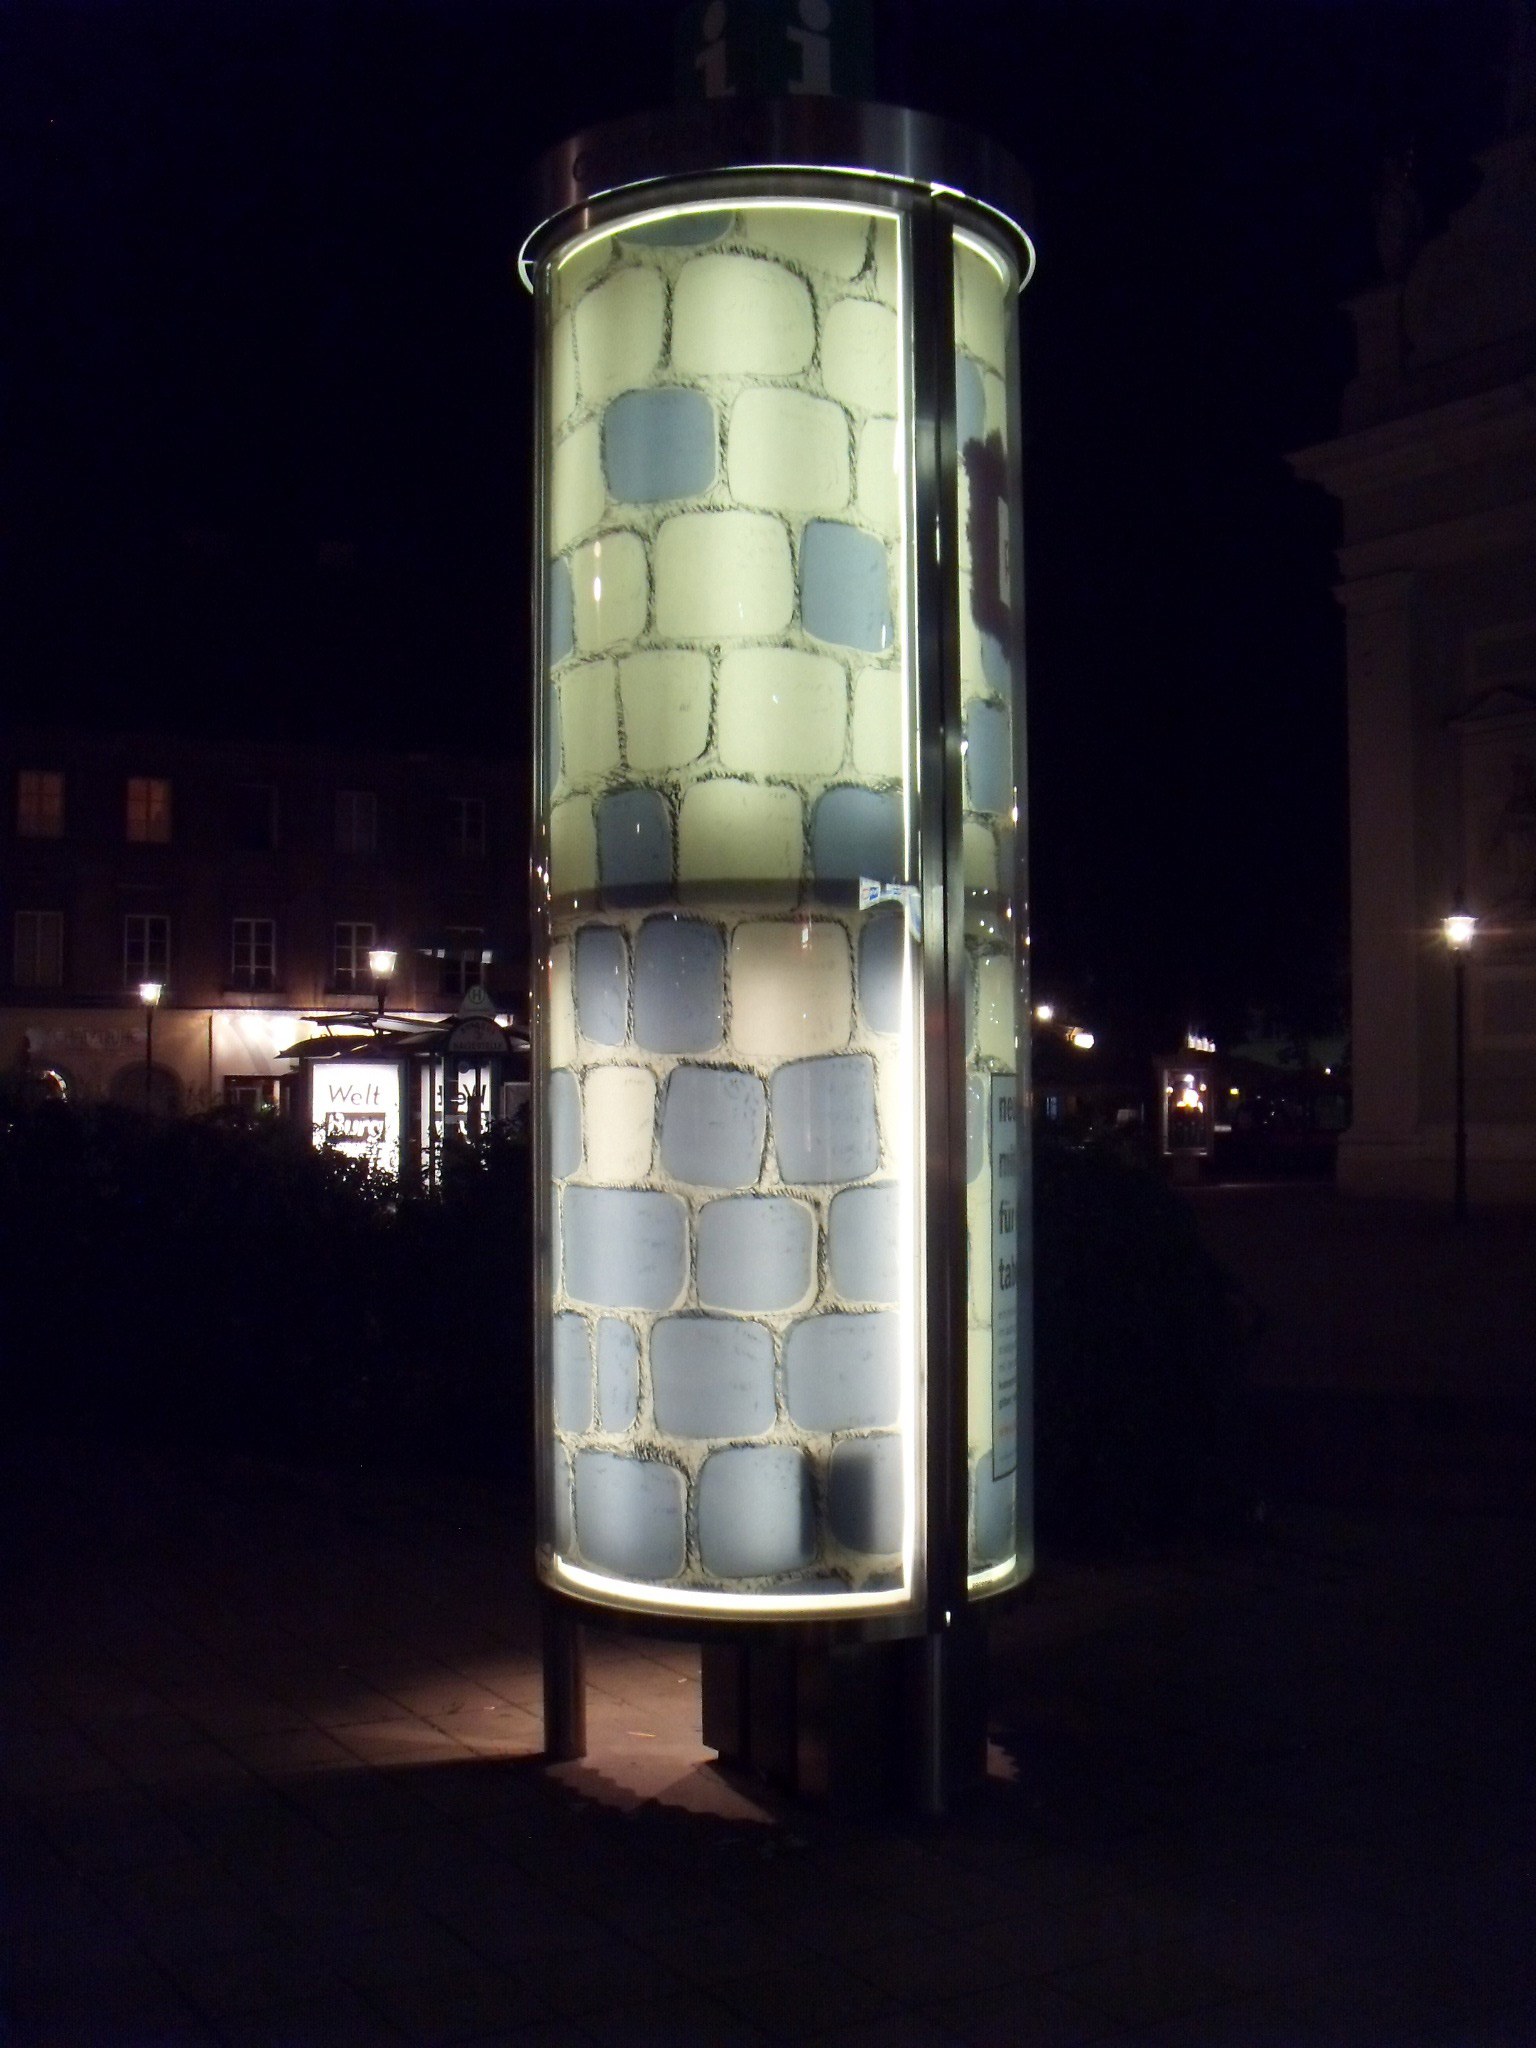 Other side of large advertising pillar. Poster illuminated inside. Illustrated cobblestone floor allover.